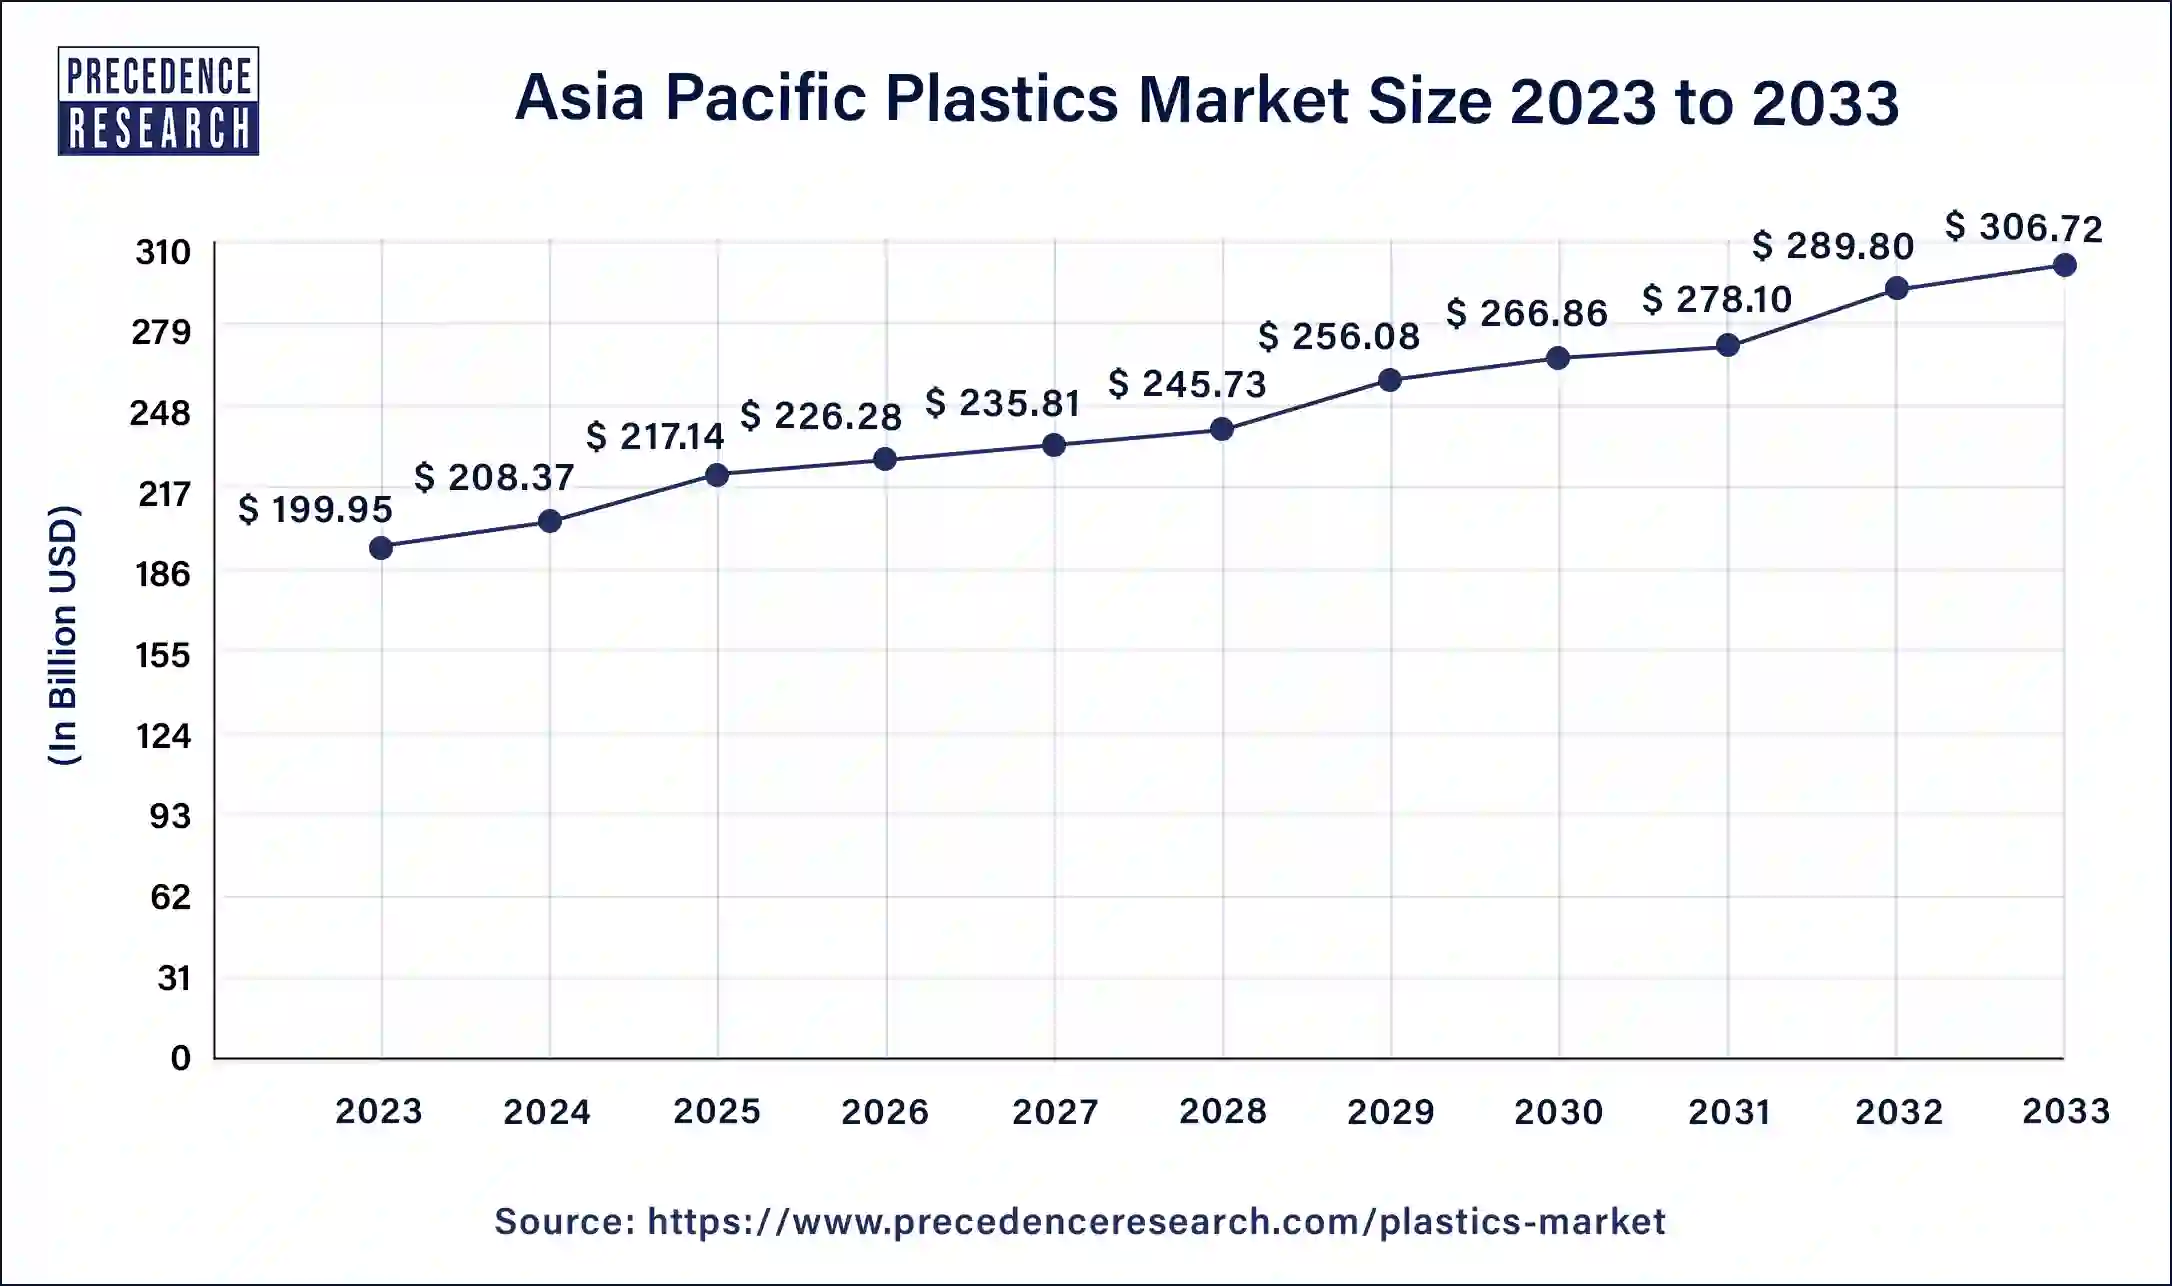 Asia Pacific Plastics Market Size 2024 to 2033